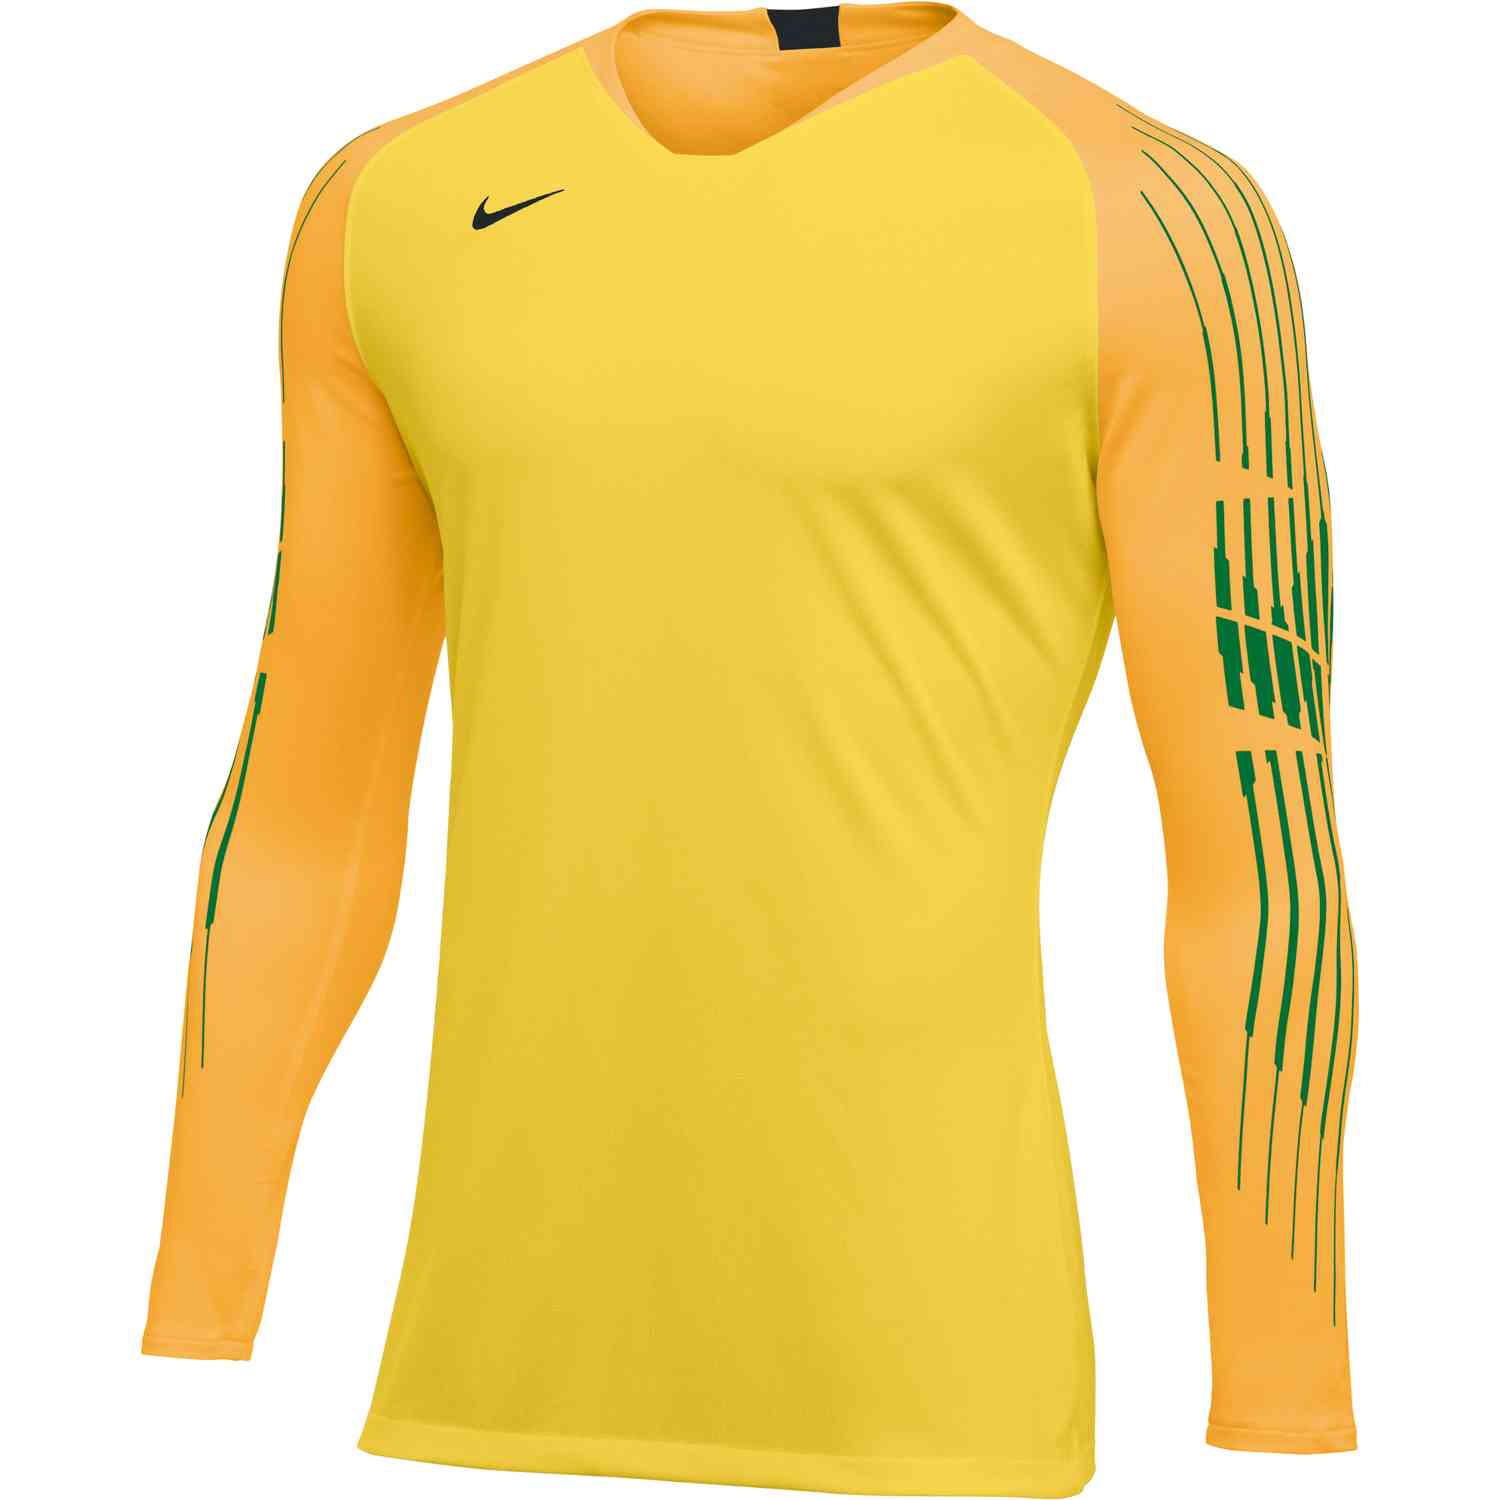 atlanta united 2020 jersey